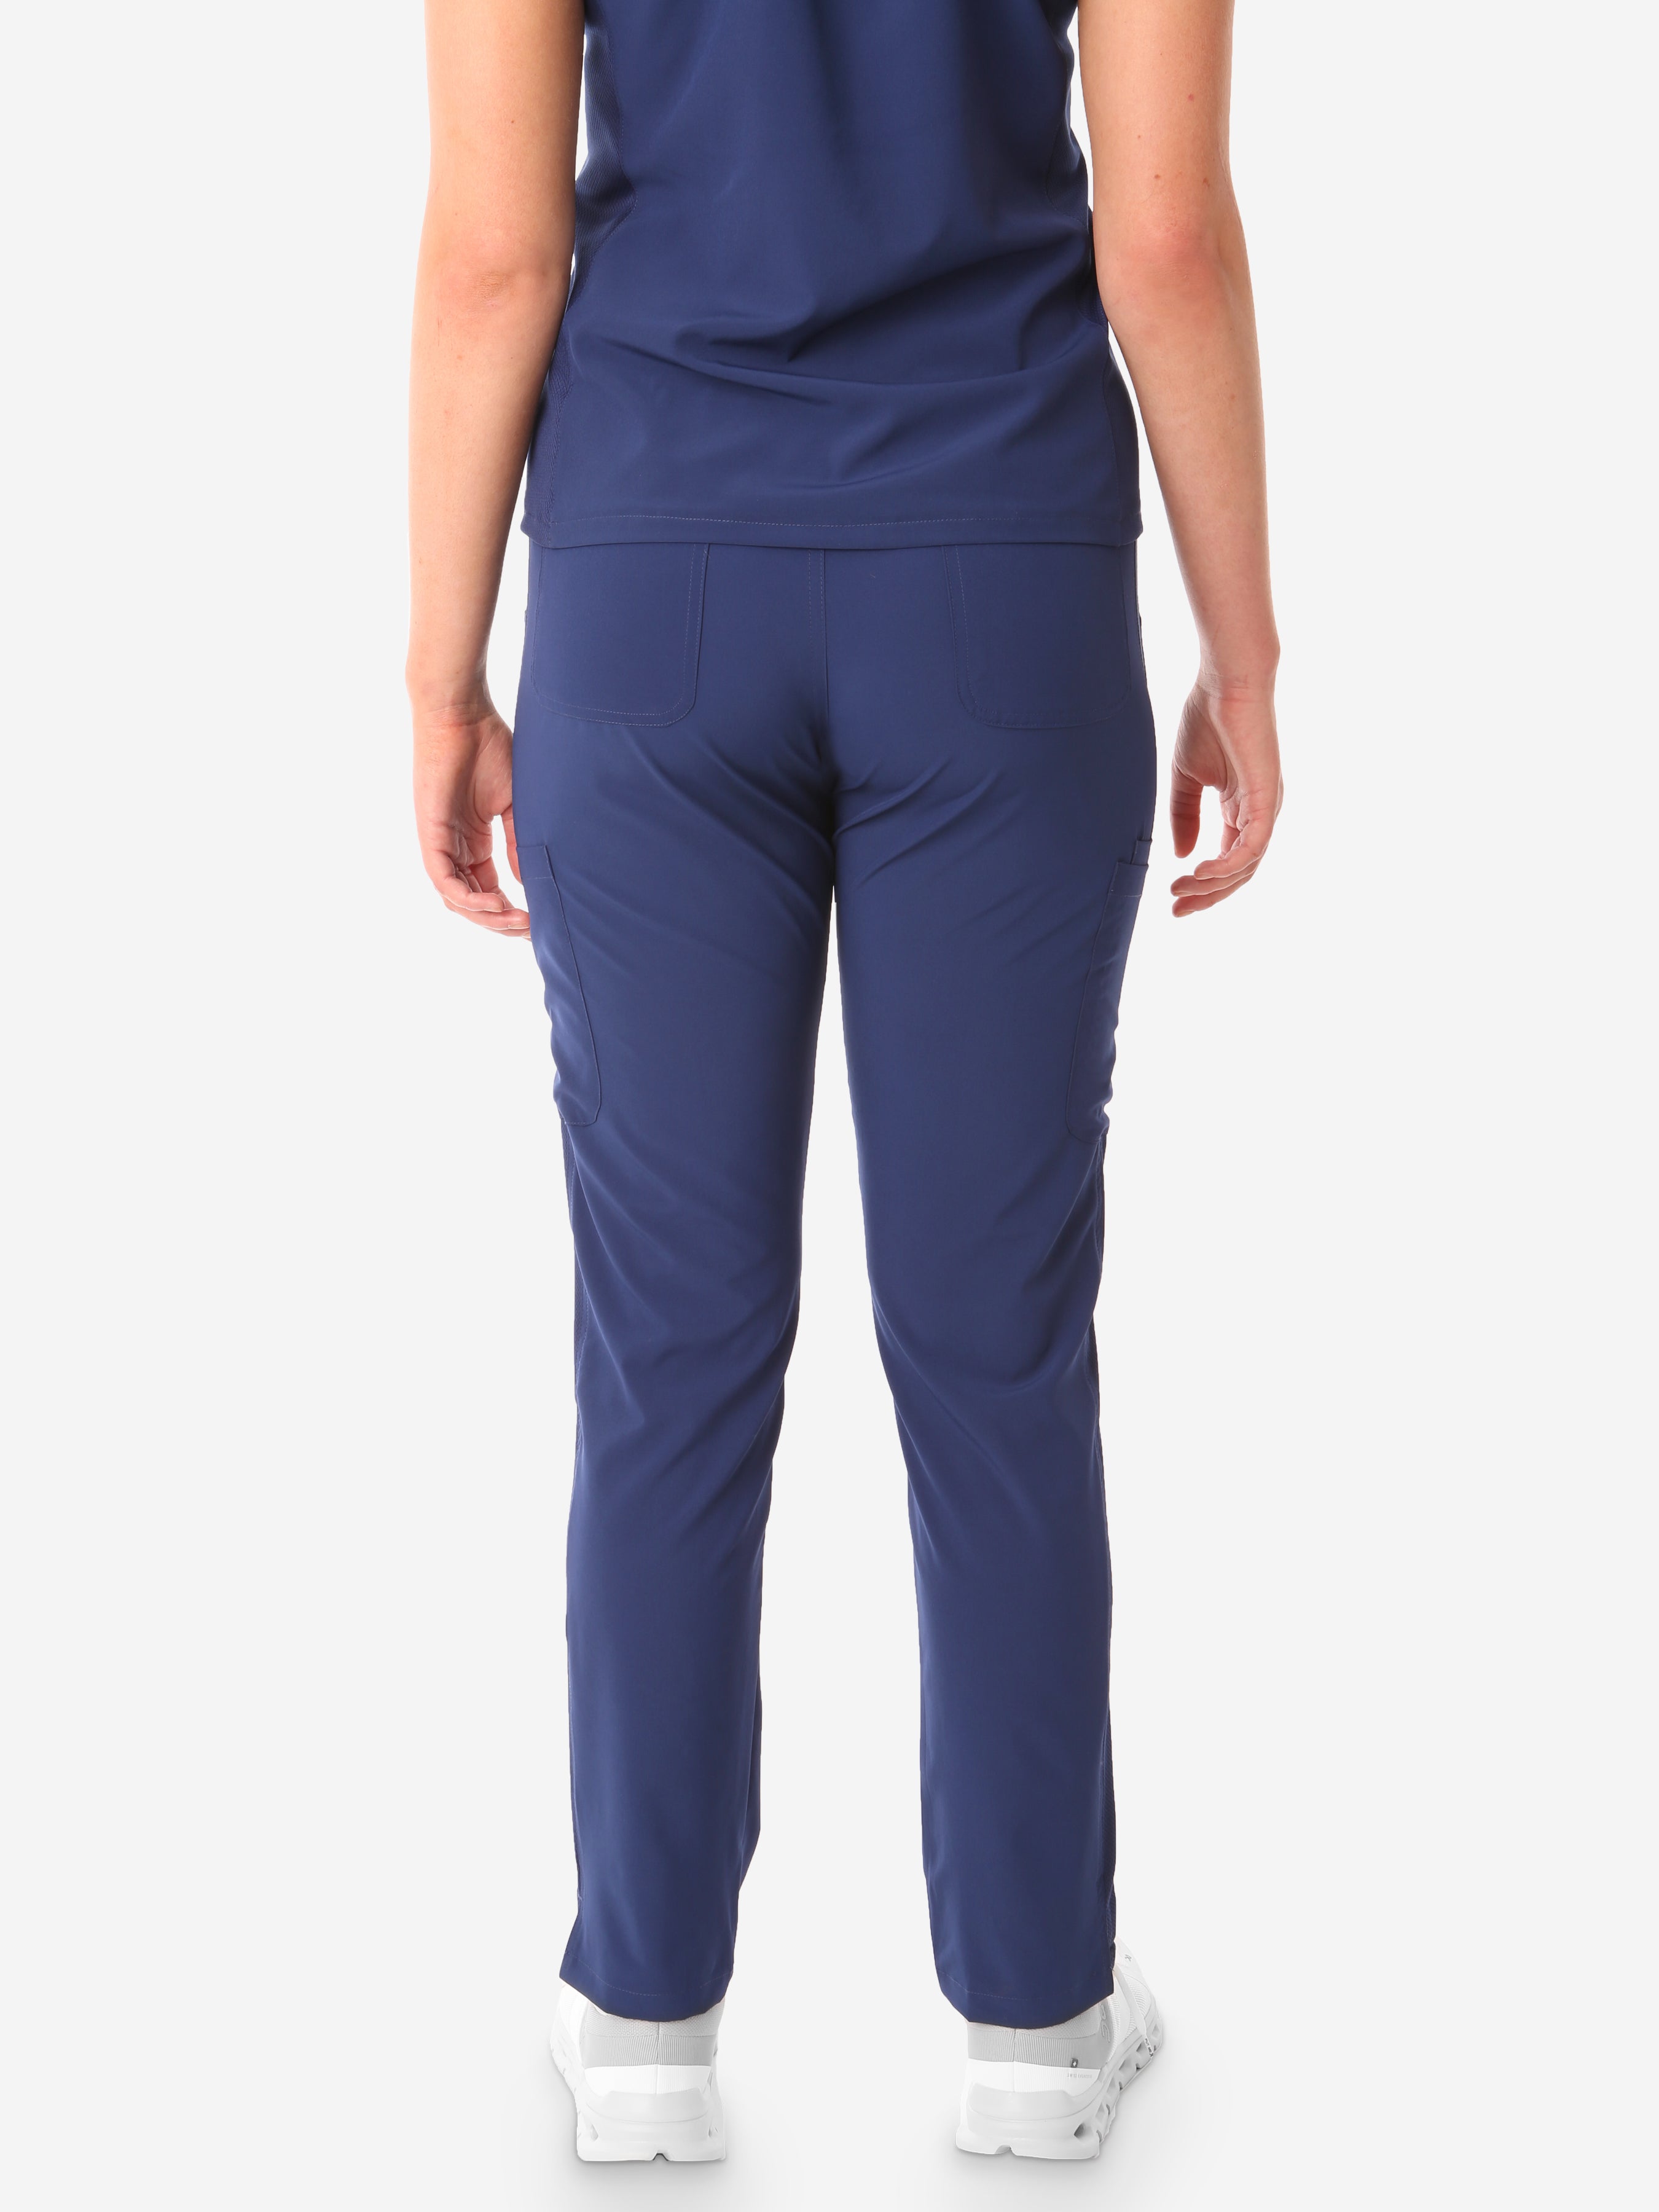 TiScrubs Navy Blue Women&#39;s Stretch 9-Pocket Pants Back View Full Body